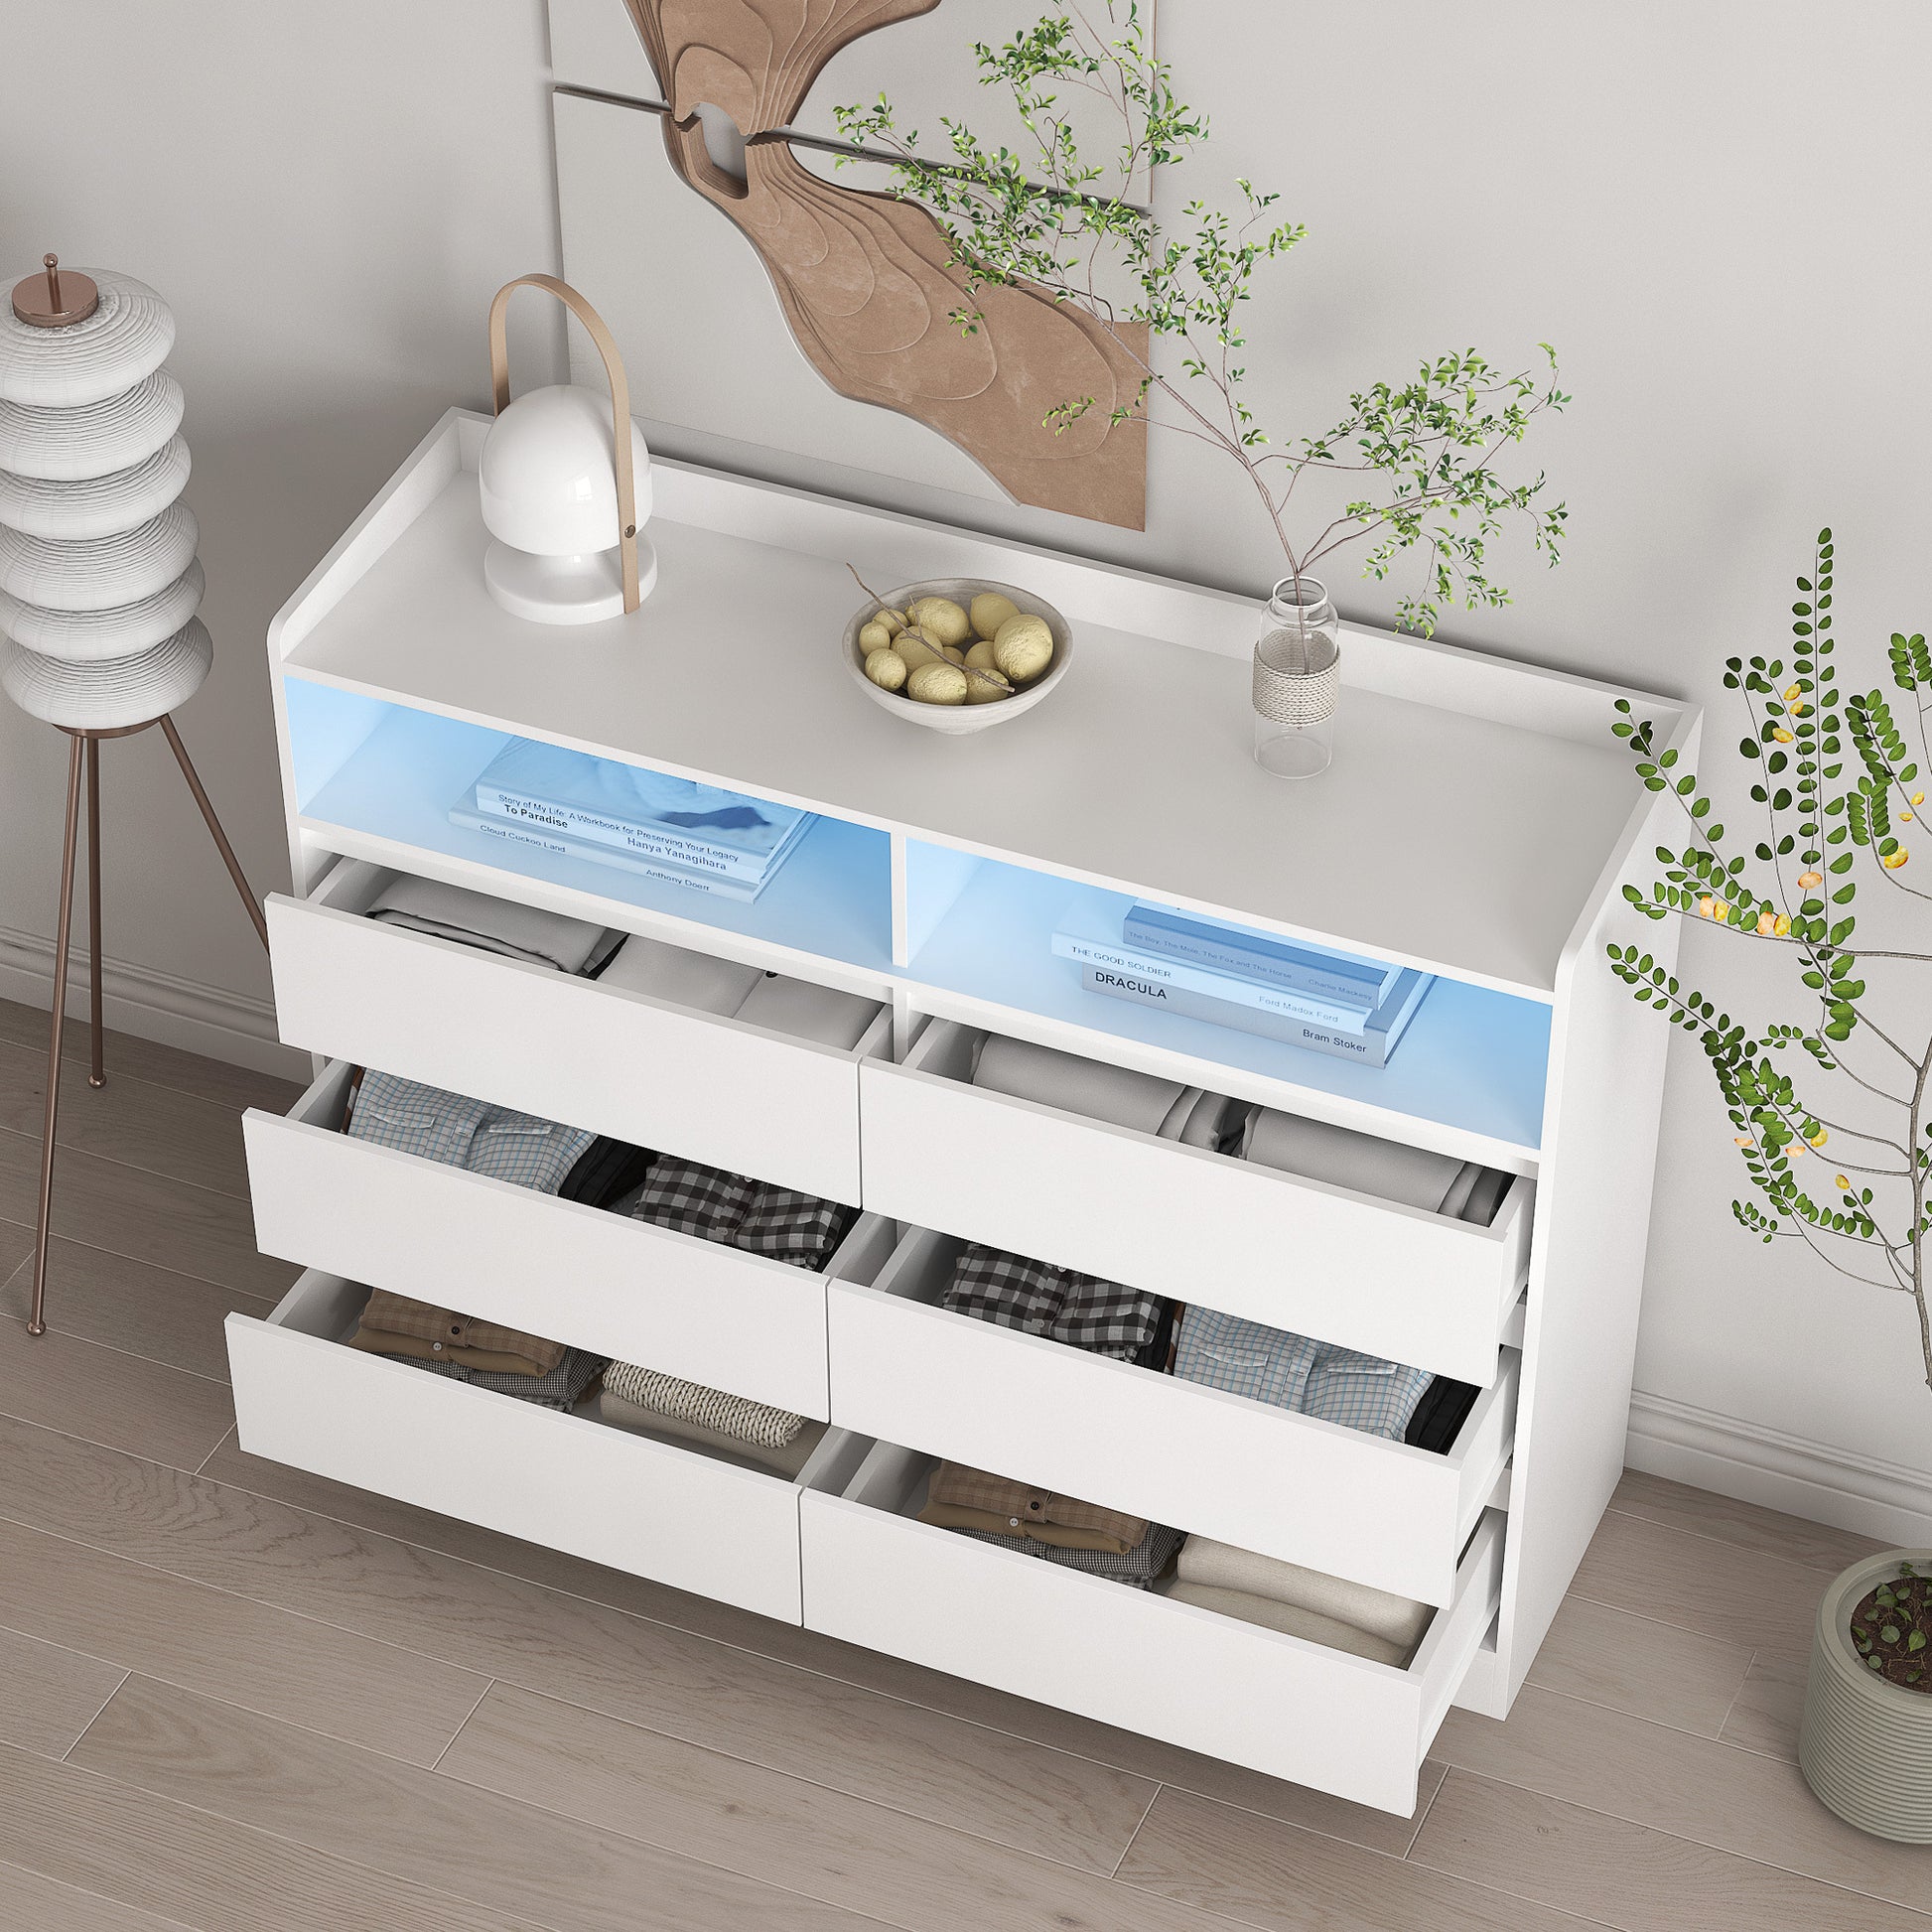 6 Drawer Dresser, White Dresser for Bedroom with LED Lights